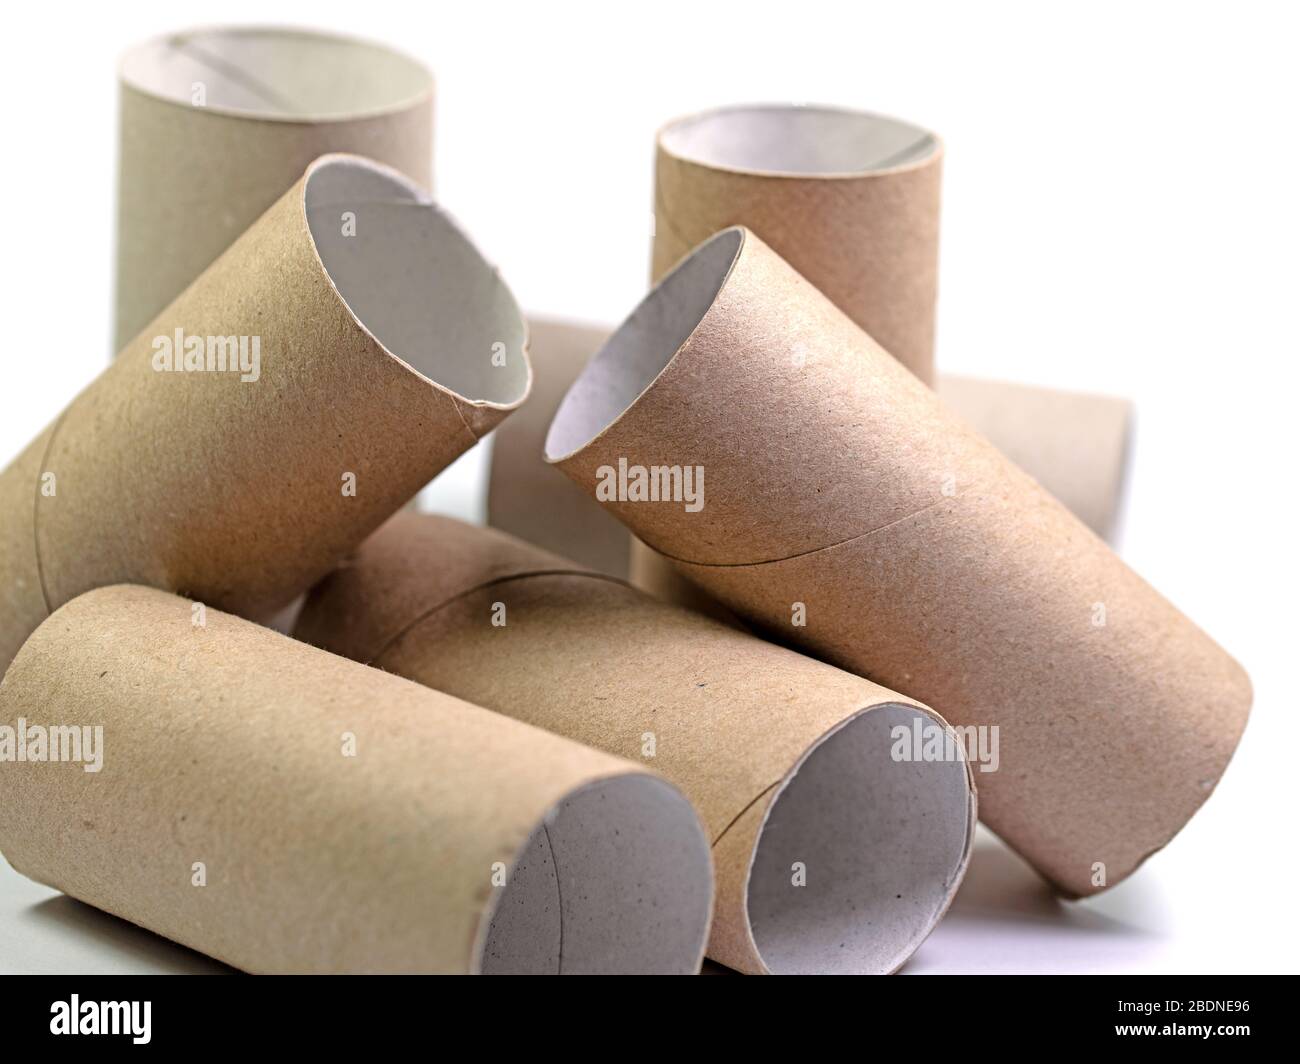 Tubos de papel higiénico fotografías e imágenes de alta resolución - Alamy